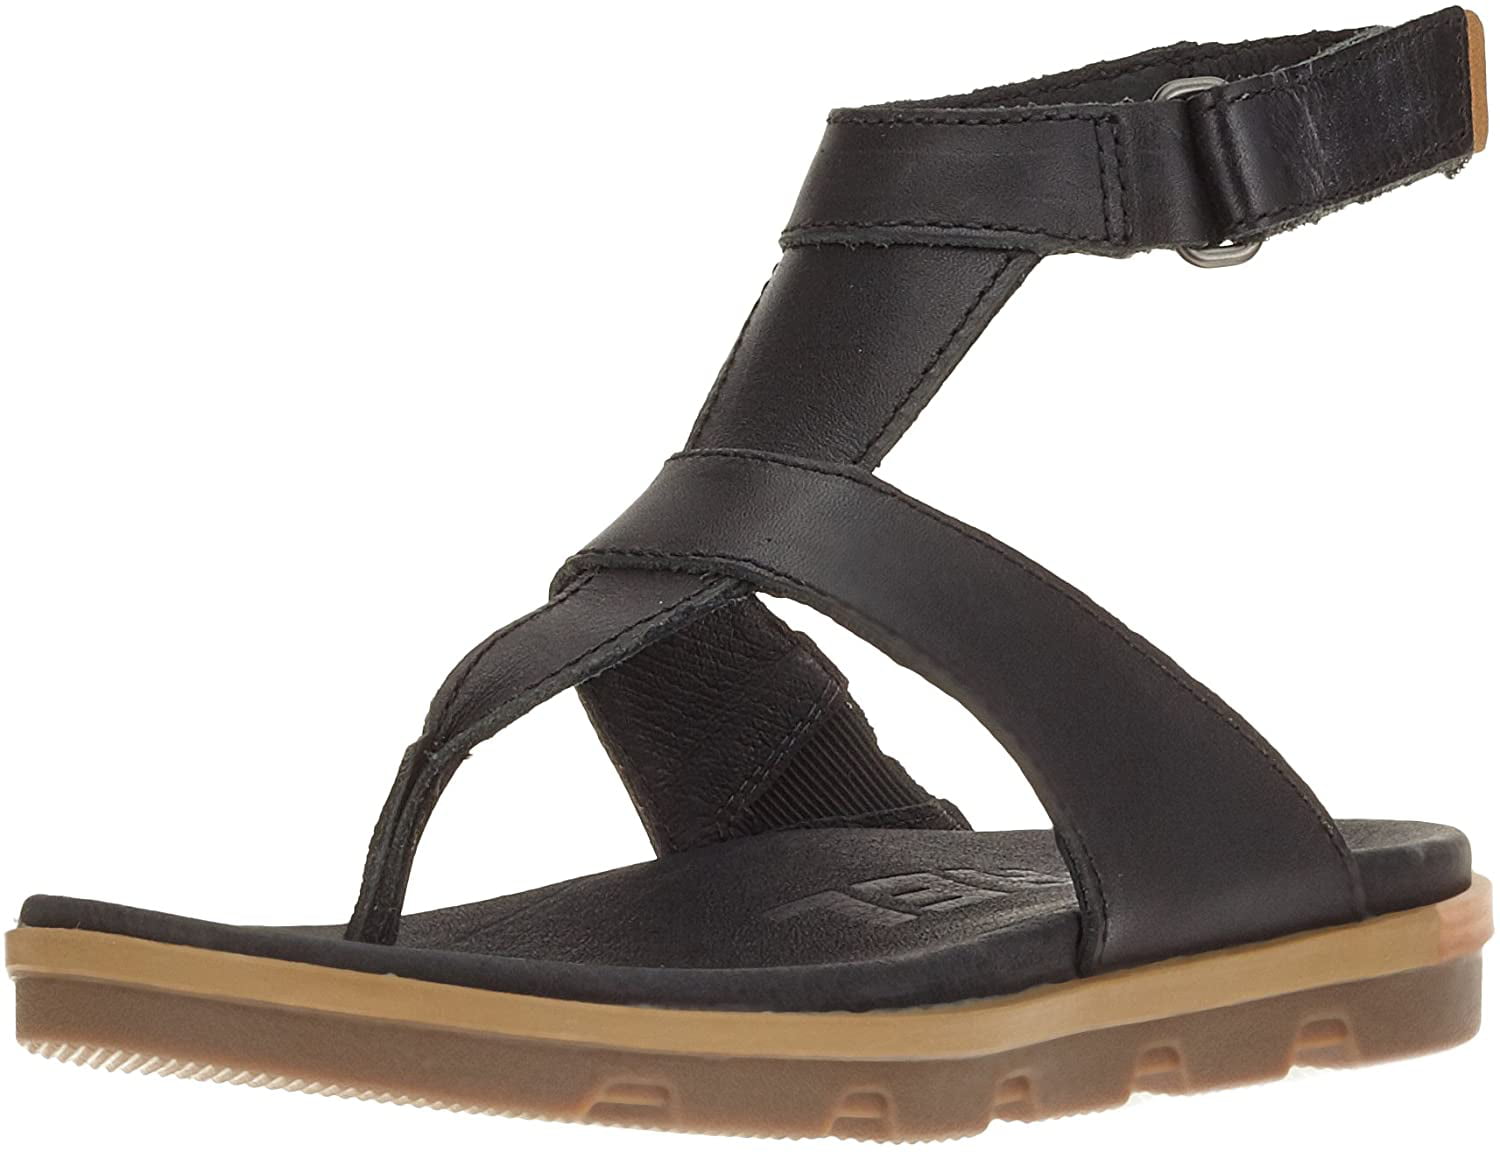 NEW Womens Sorel Torpeda Ankle Strap Flat Fashion Leather Summer Sandals Black 